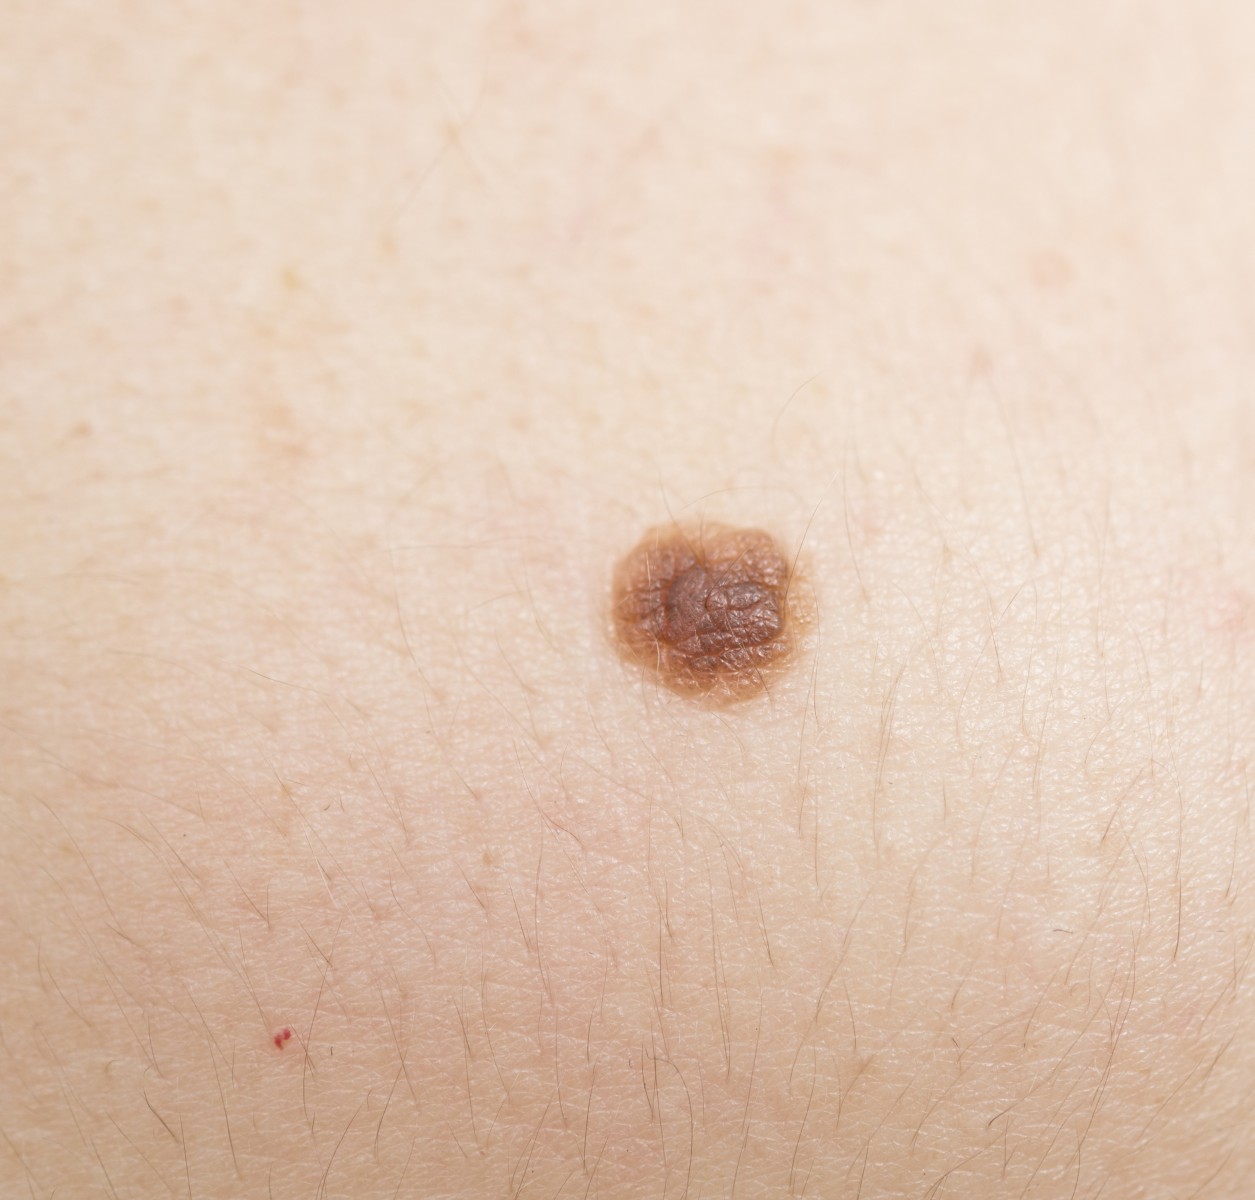 Non-invasive diagnosis of melanoma - Sun is Life